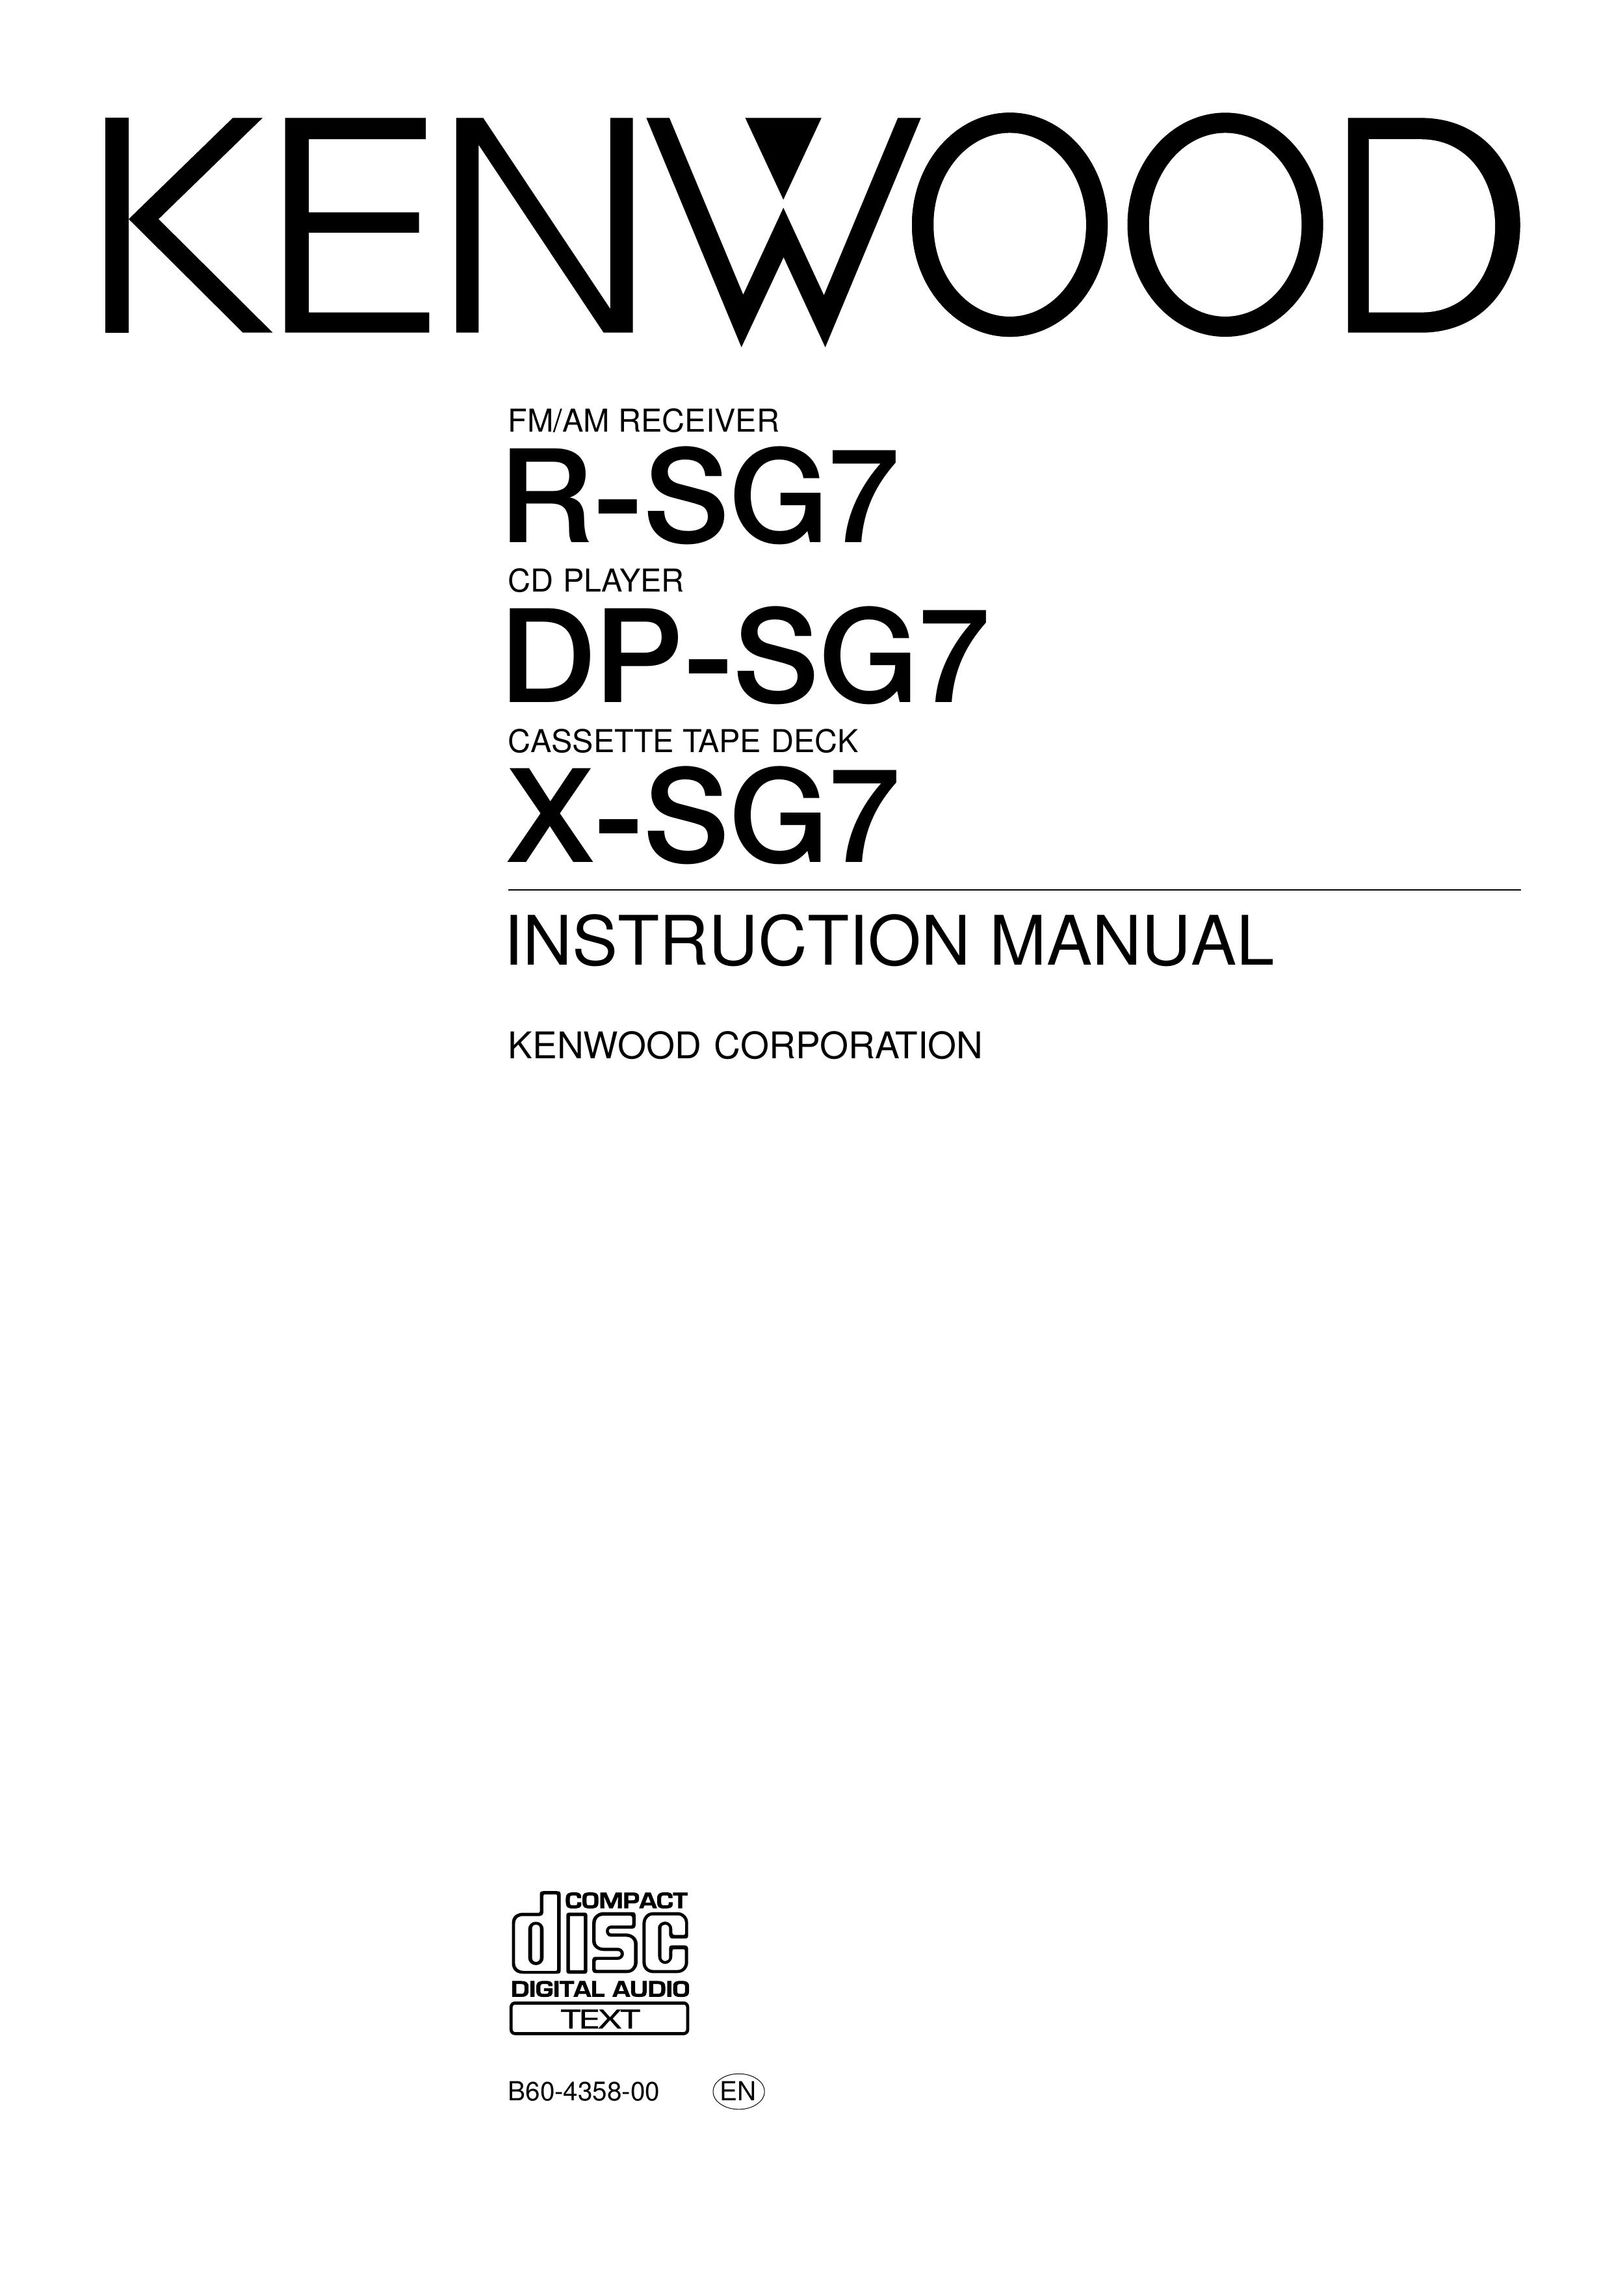 Kenwood DP-SG7 Car Stereo System User Manual